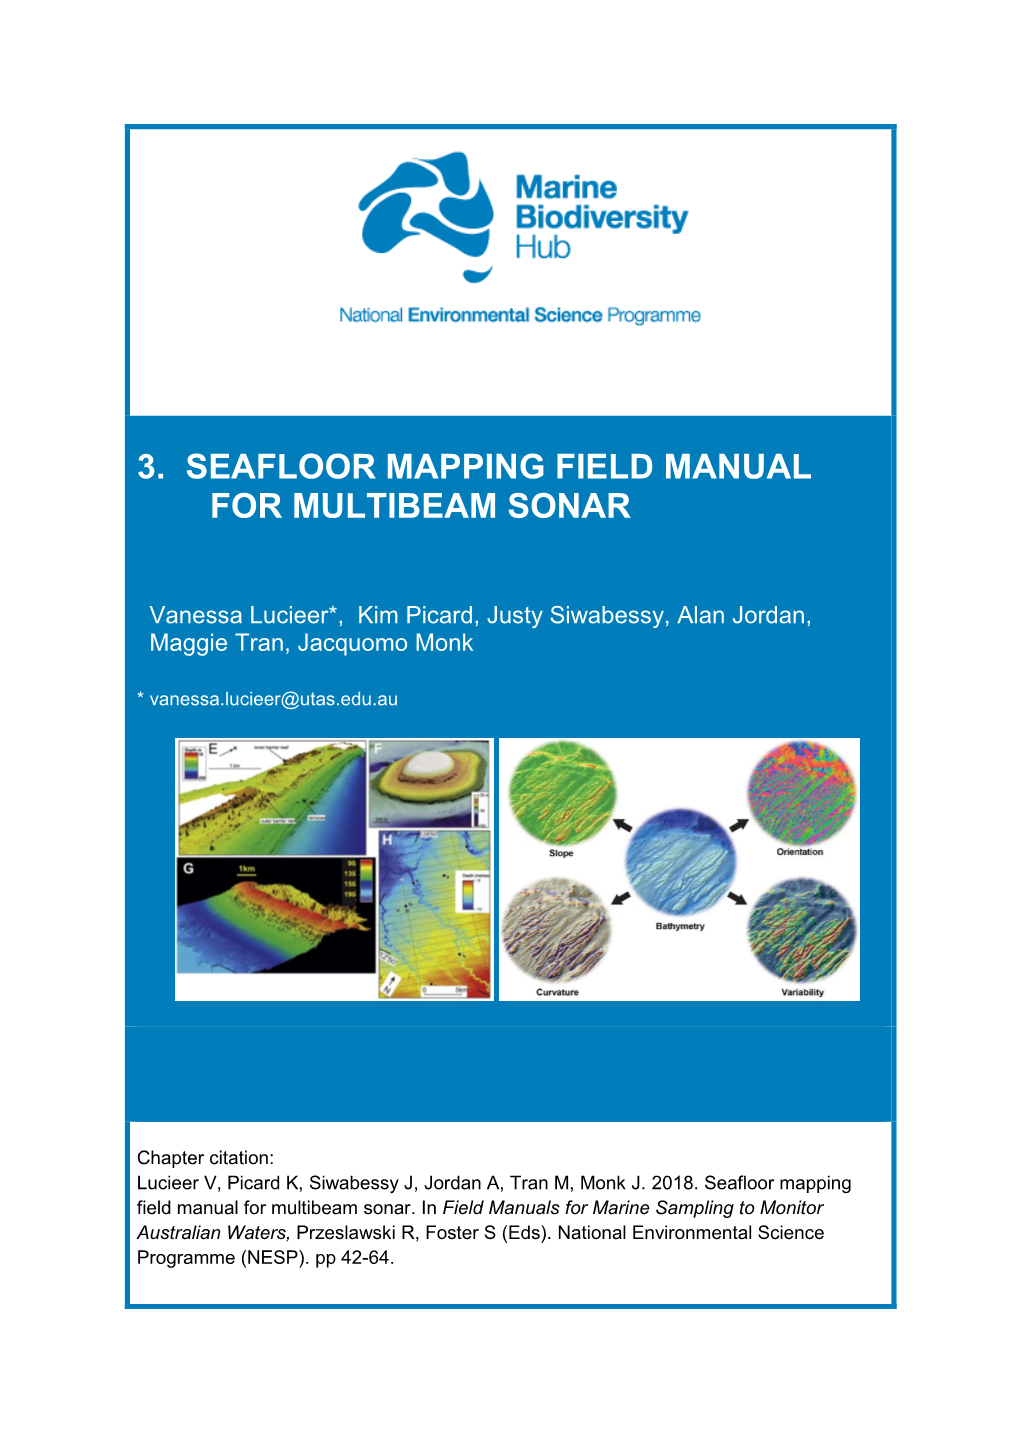 3. Seafloor Mapping Field Manual for Multibeam Sonar